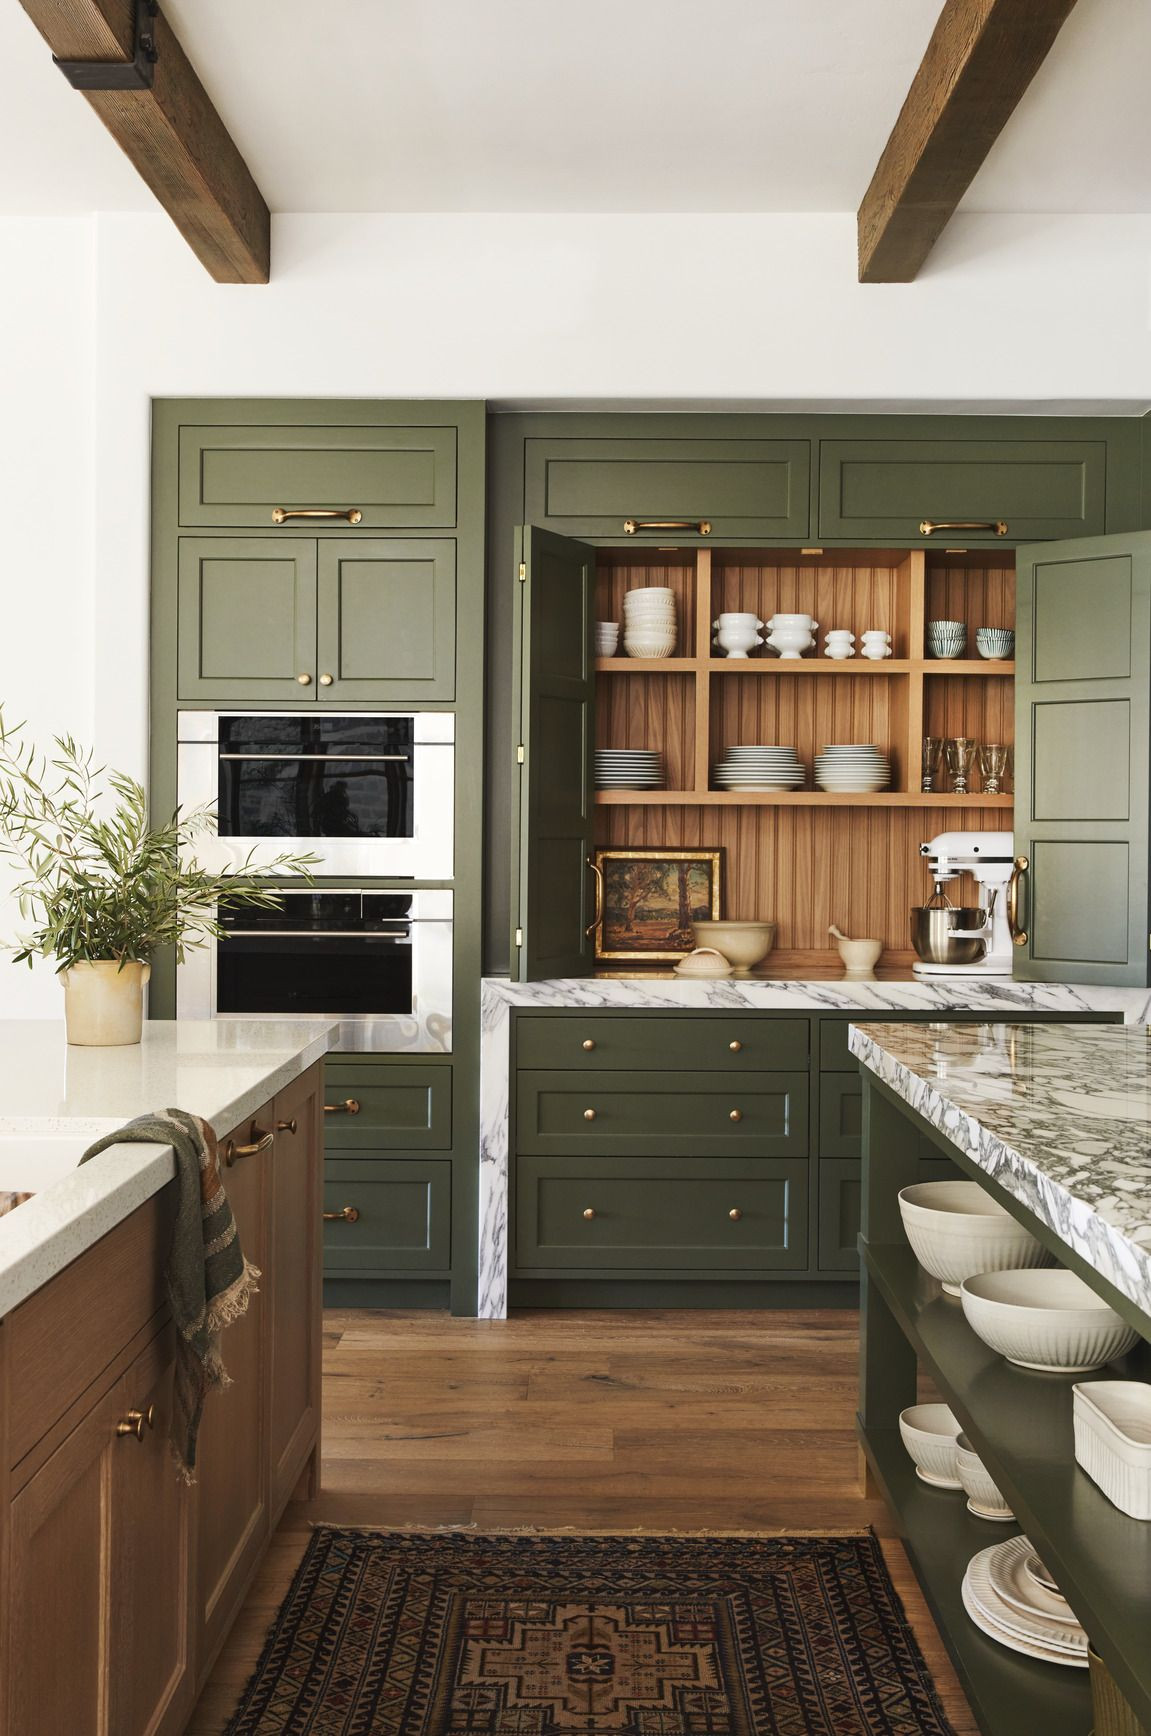 Best Kitchen Color Ideas , According to Interior Designers